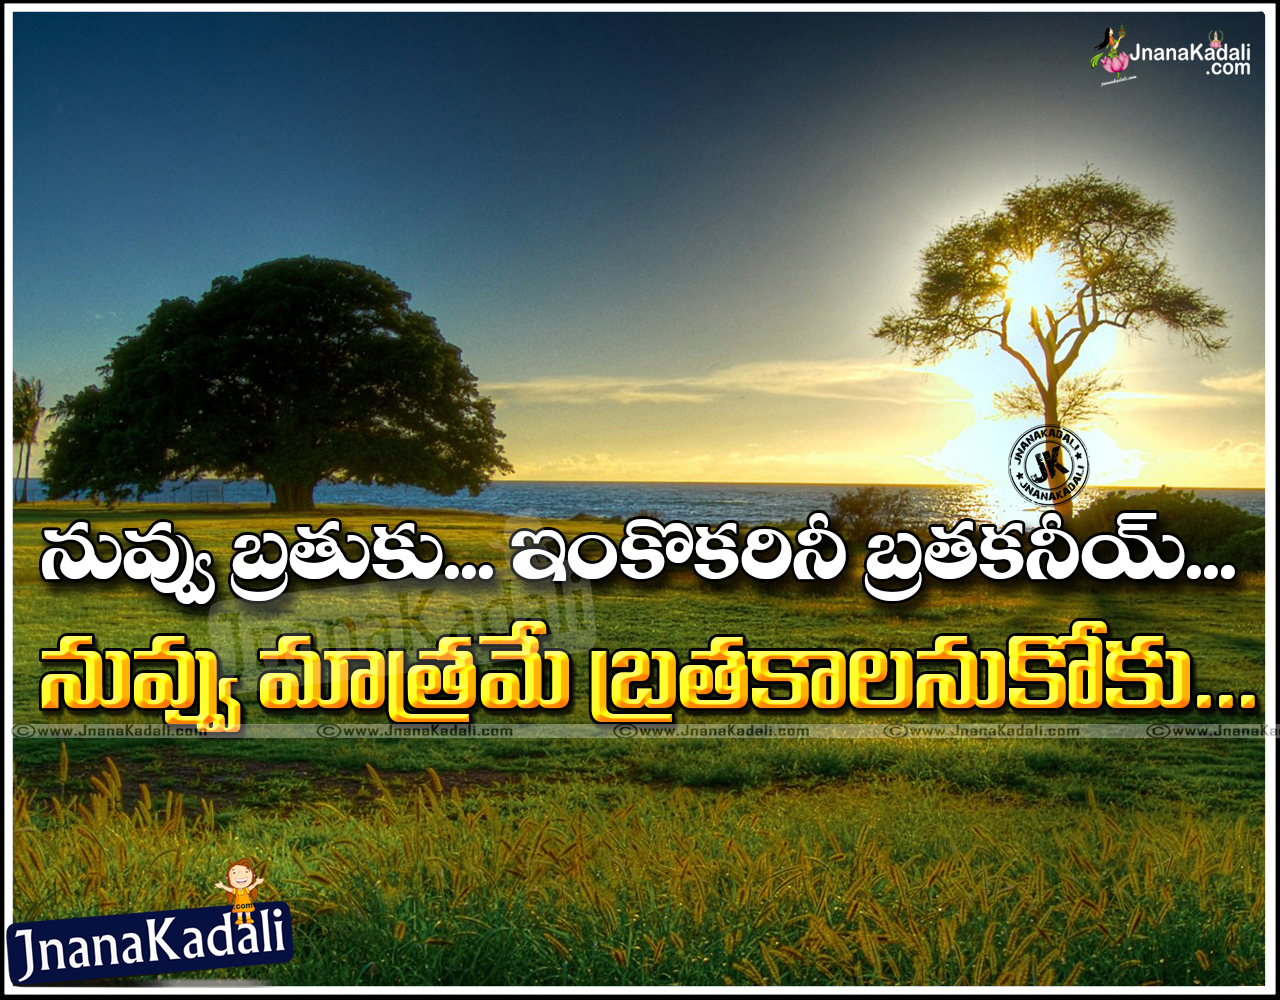 Inspirational Good afternoon Telugu quotes messages | JNANA KADALI ...